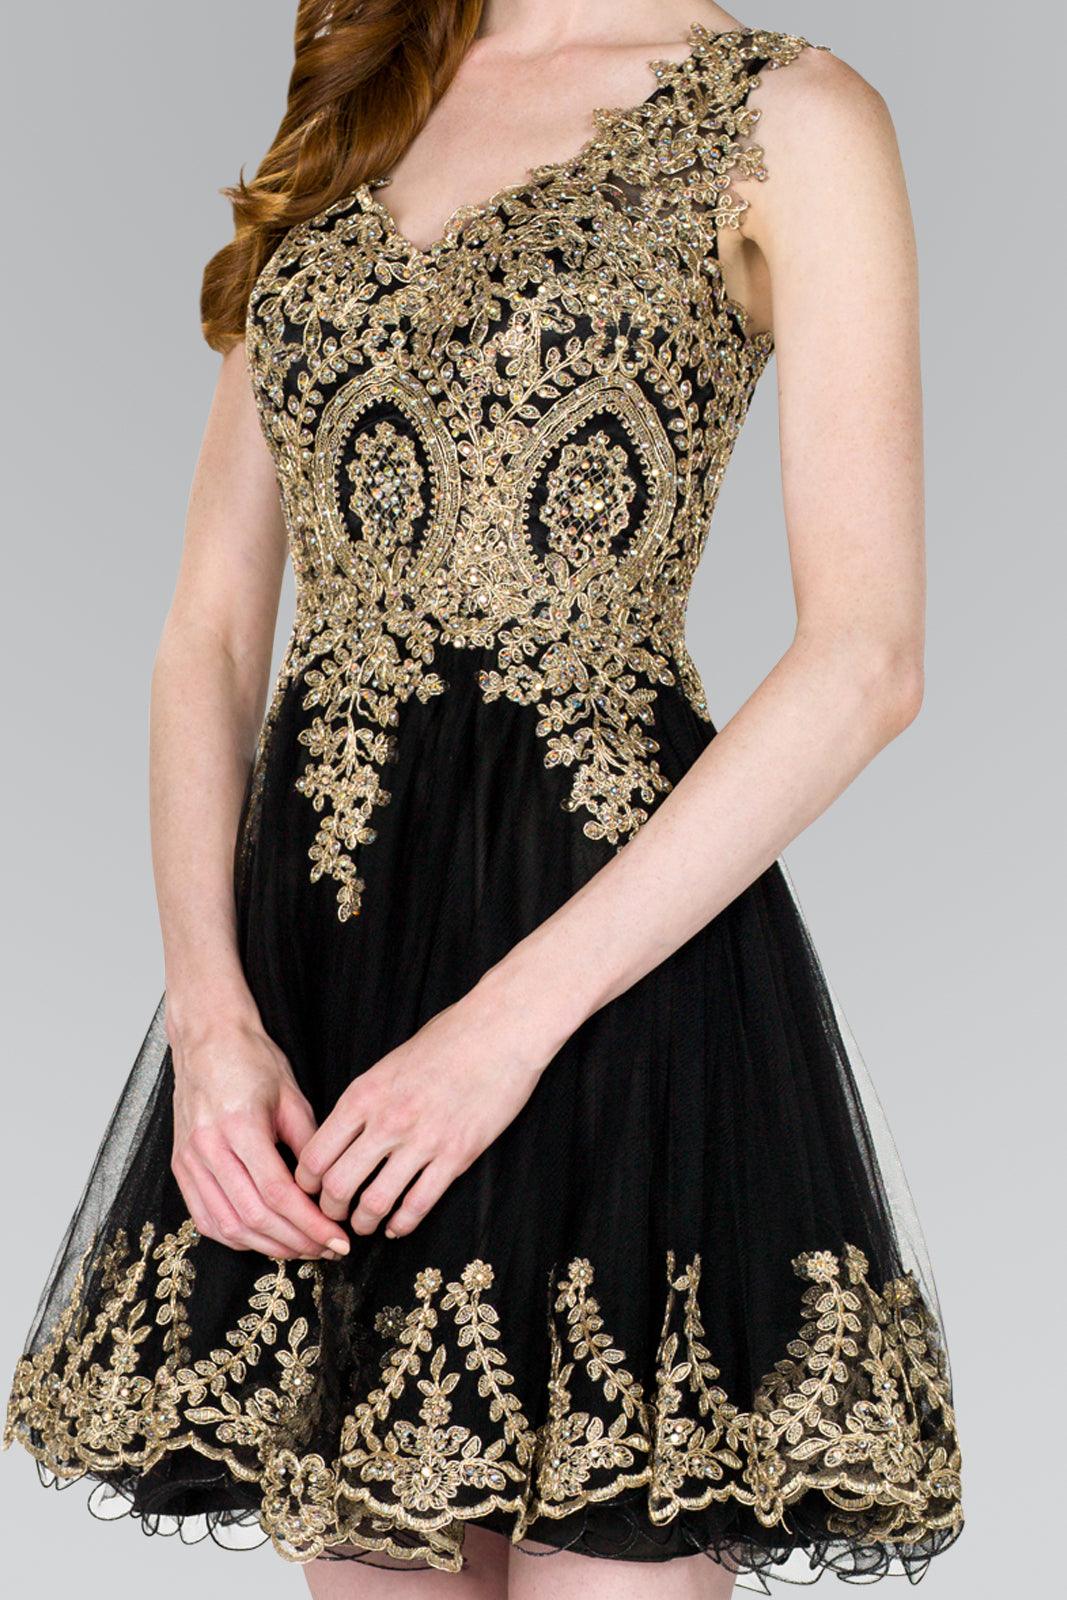 Sleeveless Tulle Short Prom Dress - The Dress Outlet